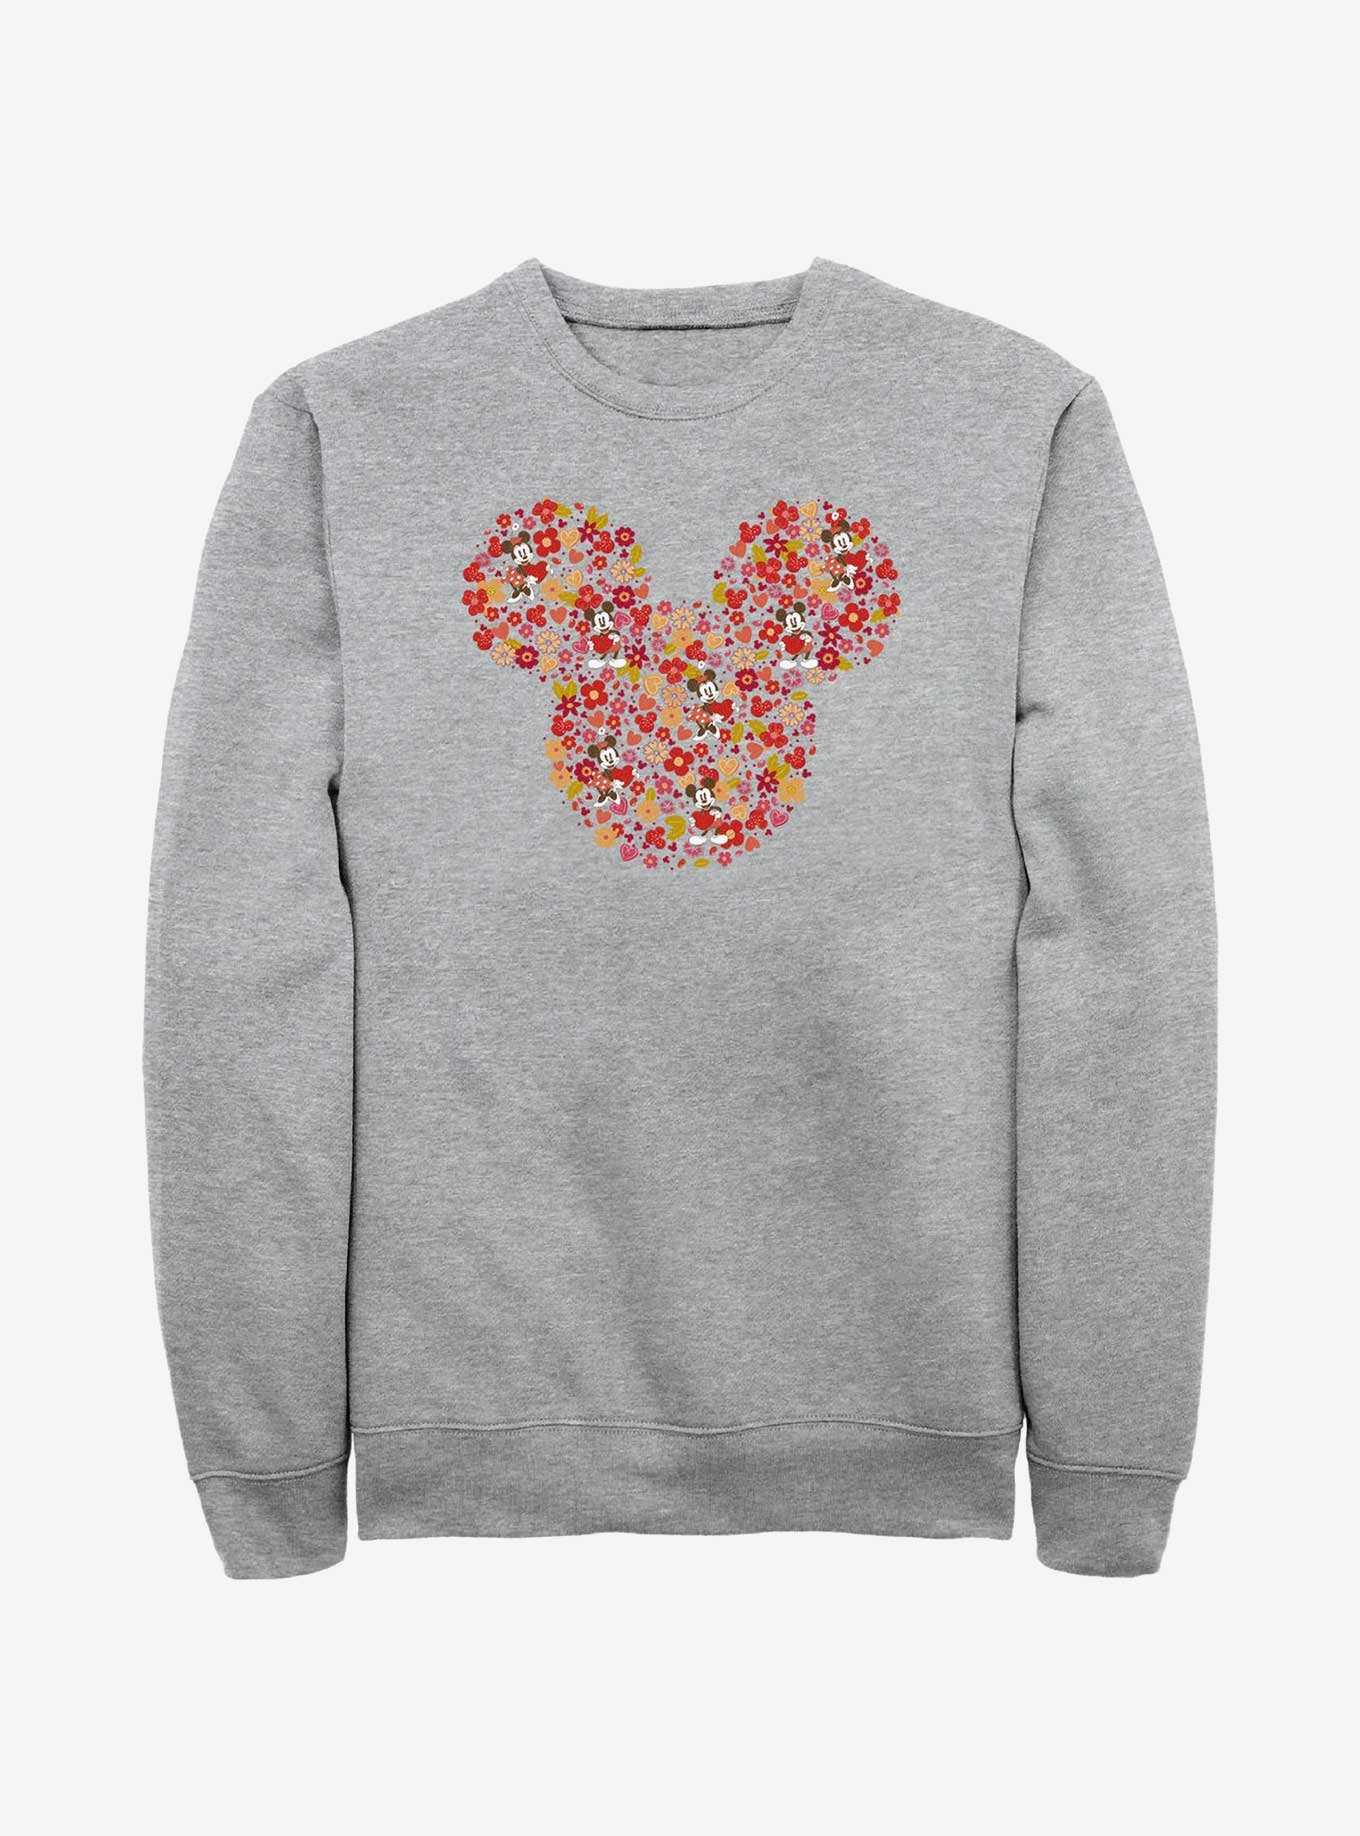 Disney Mickey Mouse Mickey Flowers Sweatshirt, , hi-res